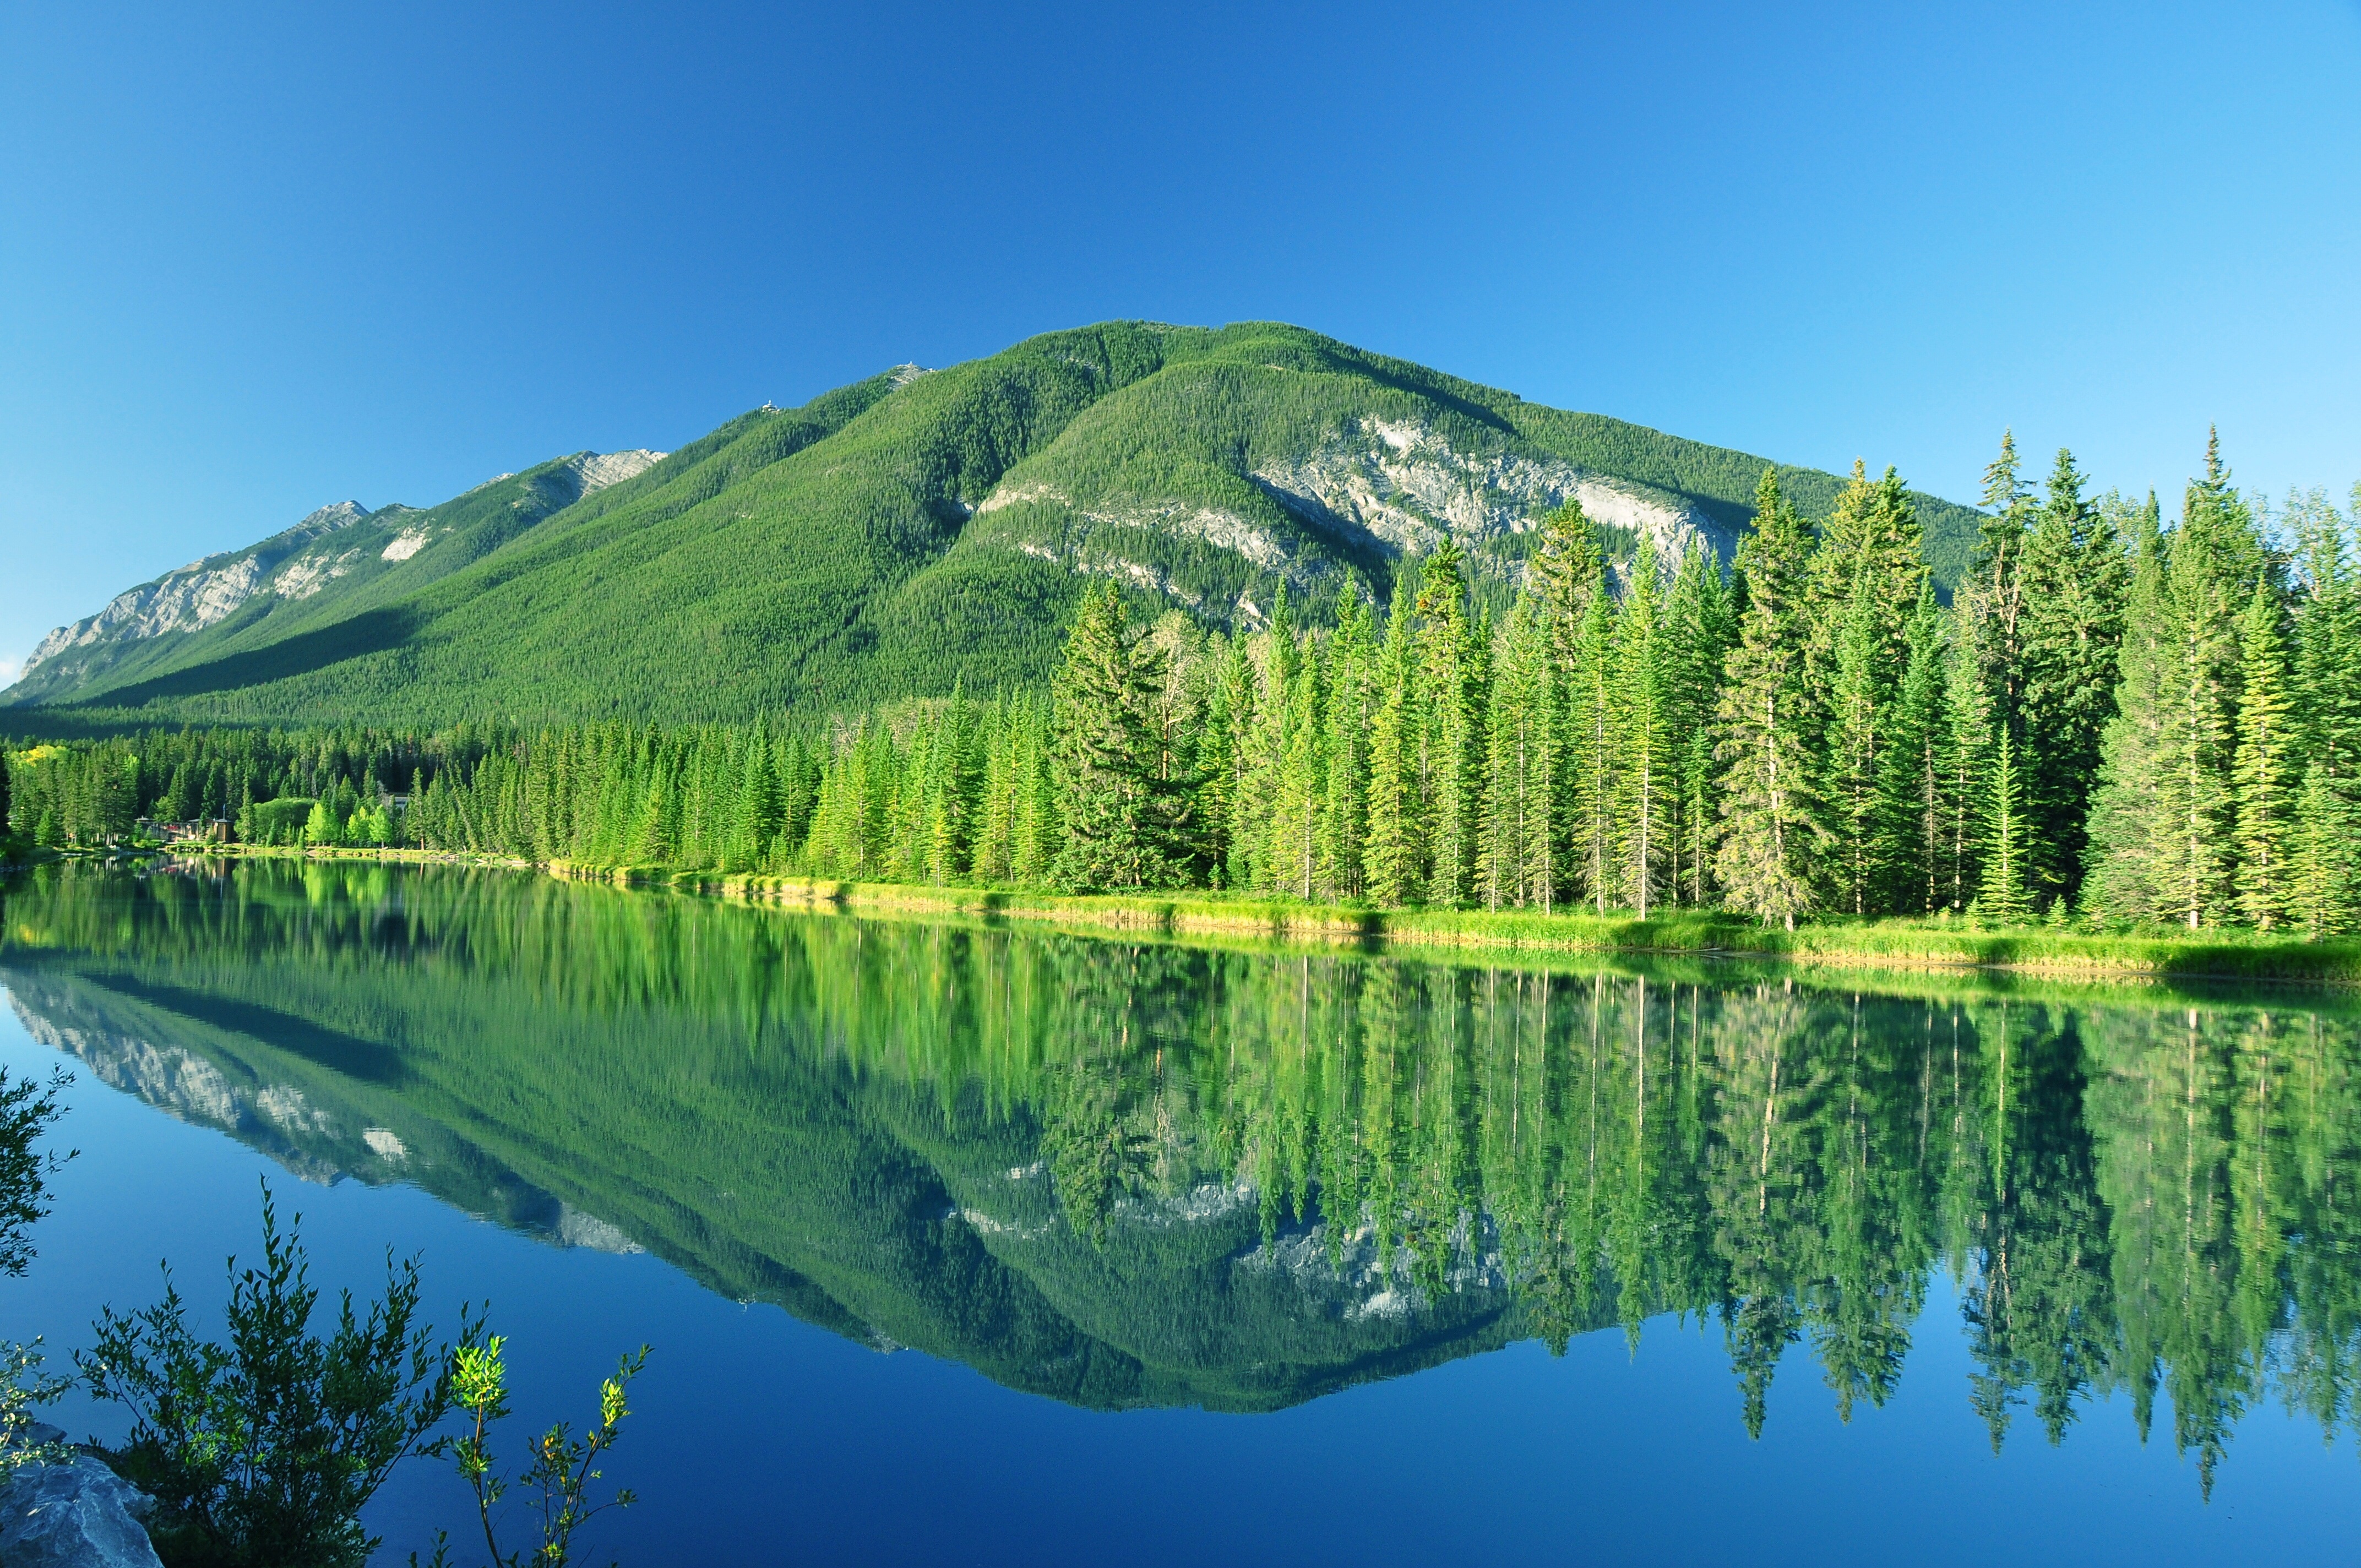 753041 descargar imagen tierra/naturaleza, reflejo, parque nacional banff, canadá, bosque, lago, paisaje, montaña, árbol: fondos de pantalla y protectores de pantalla gratis